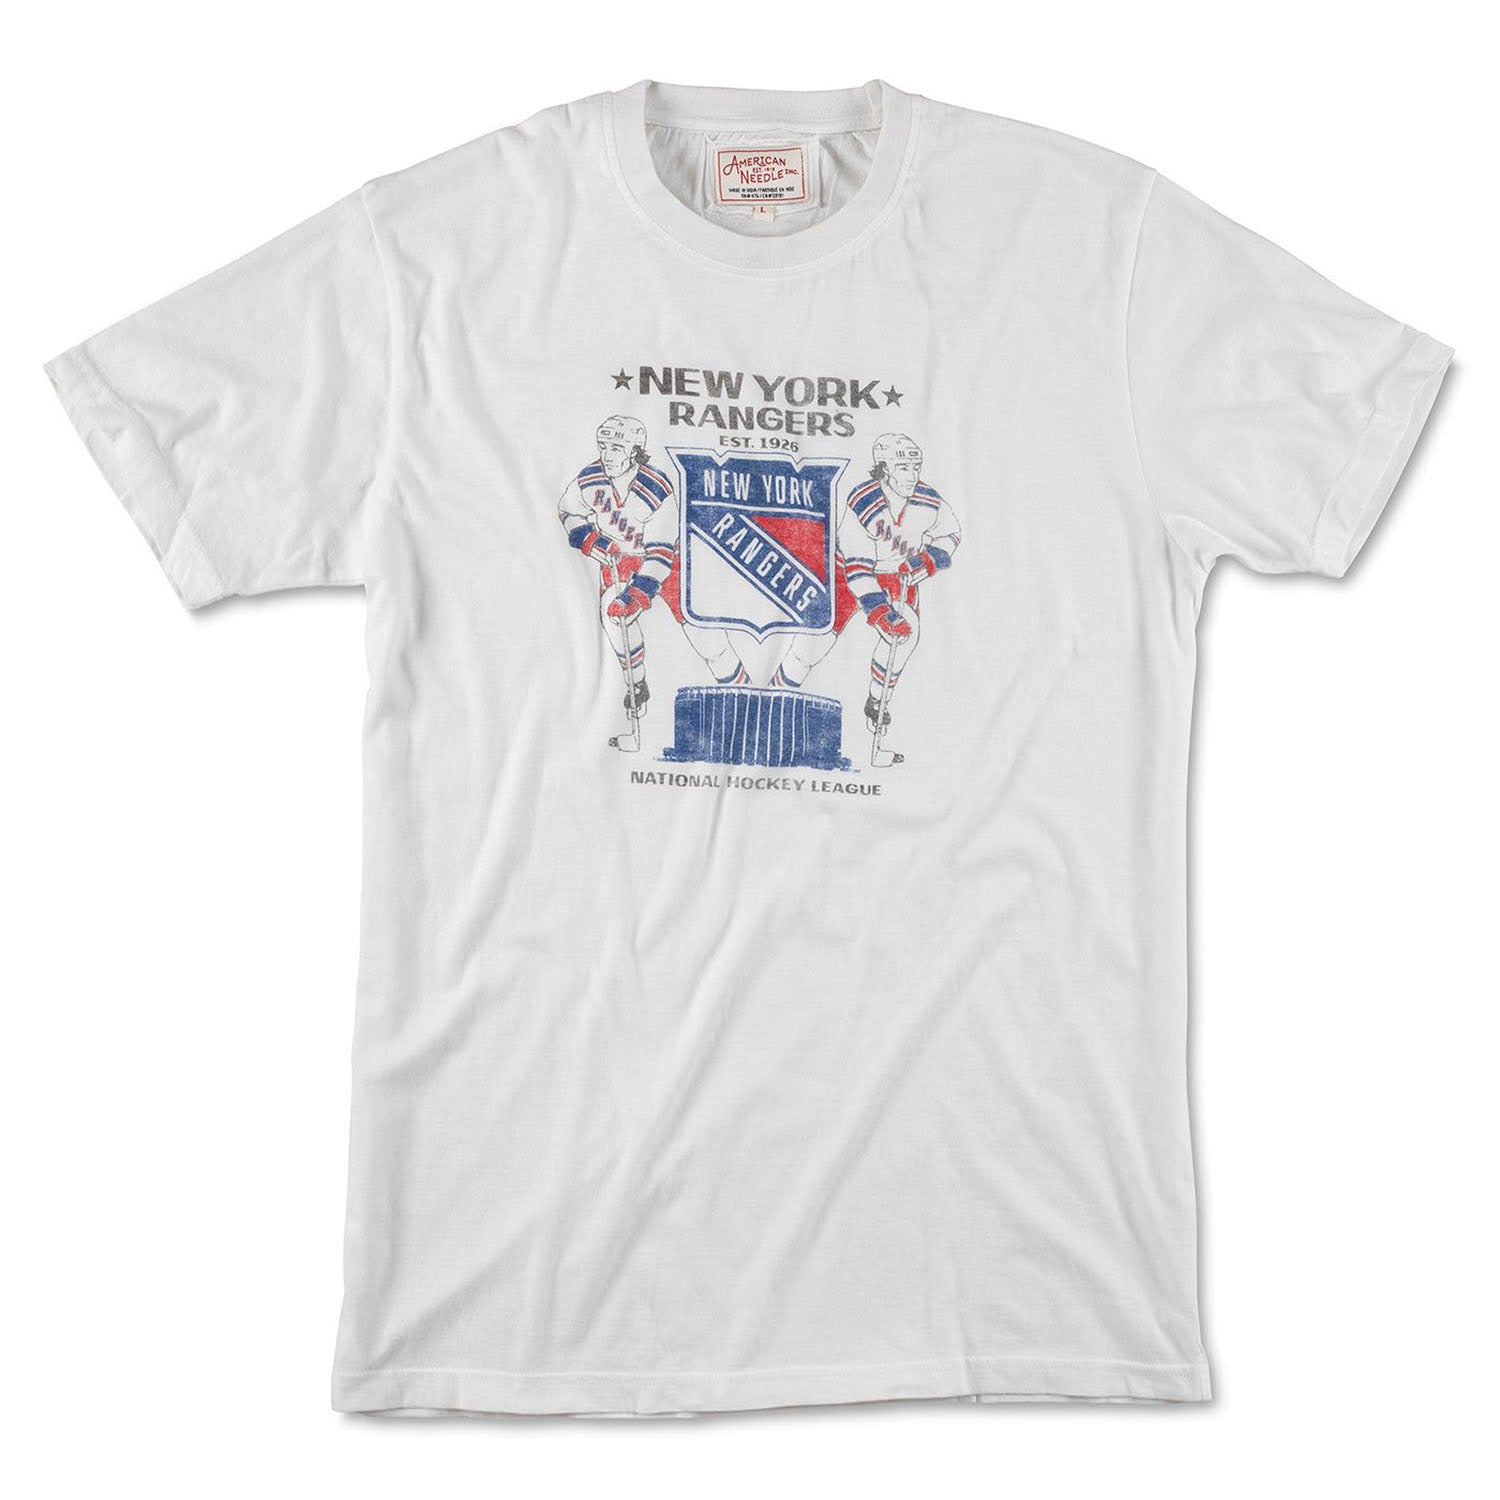  AMERICAN NEEDLE Brass Tacks NHL Team Logo T-Shirt by